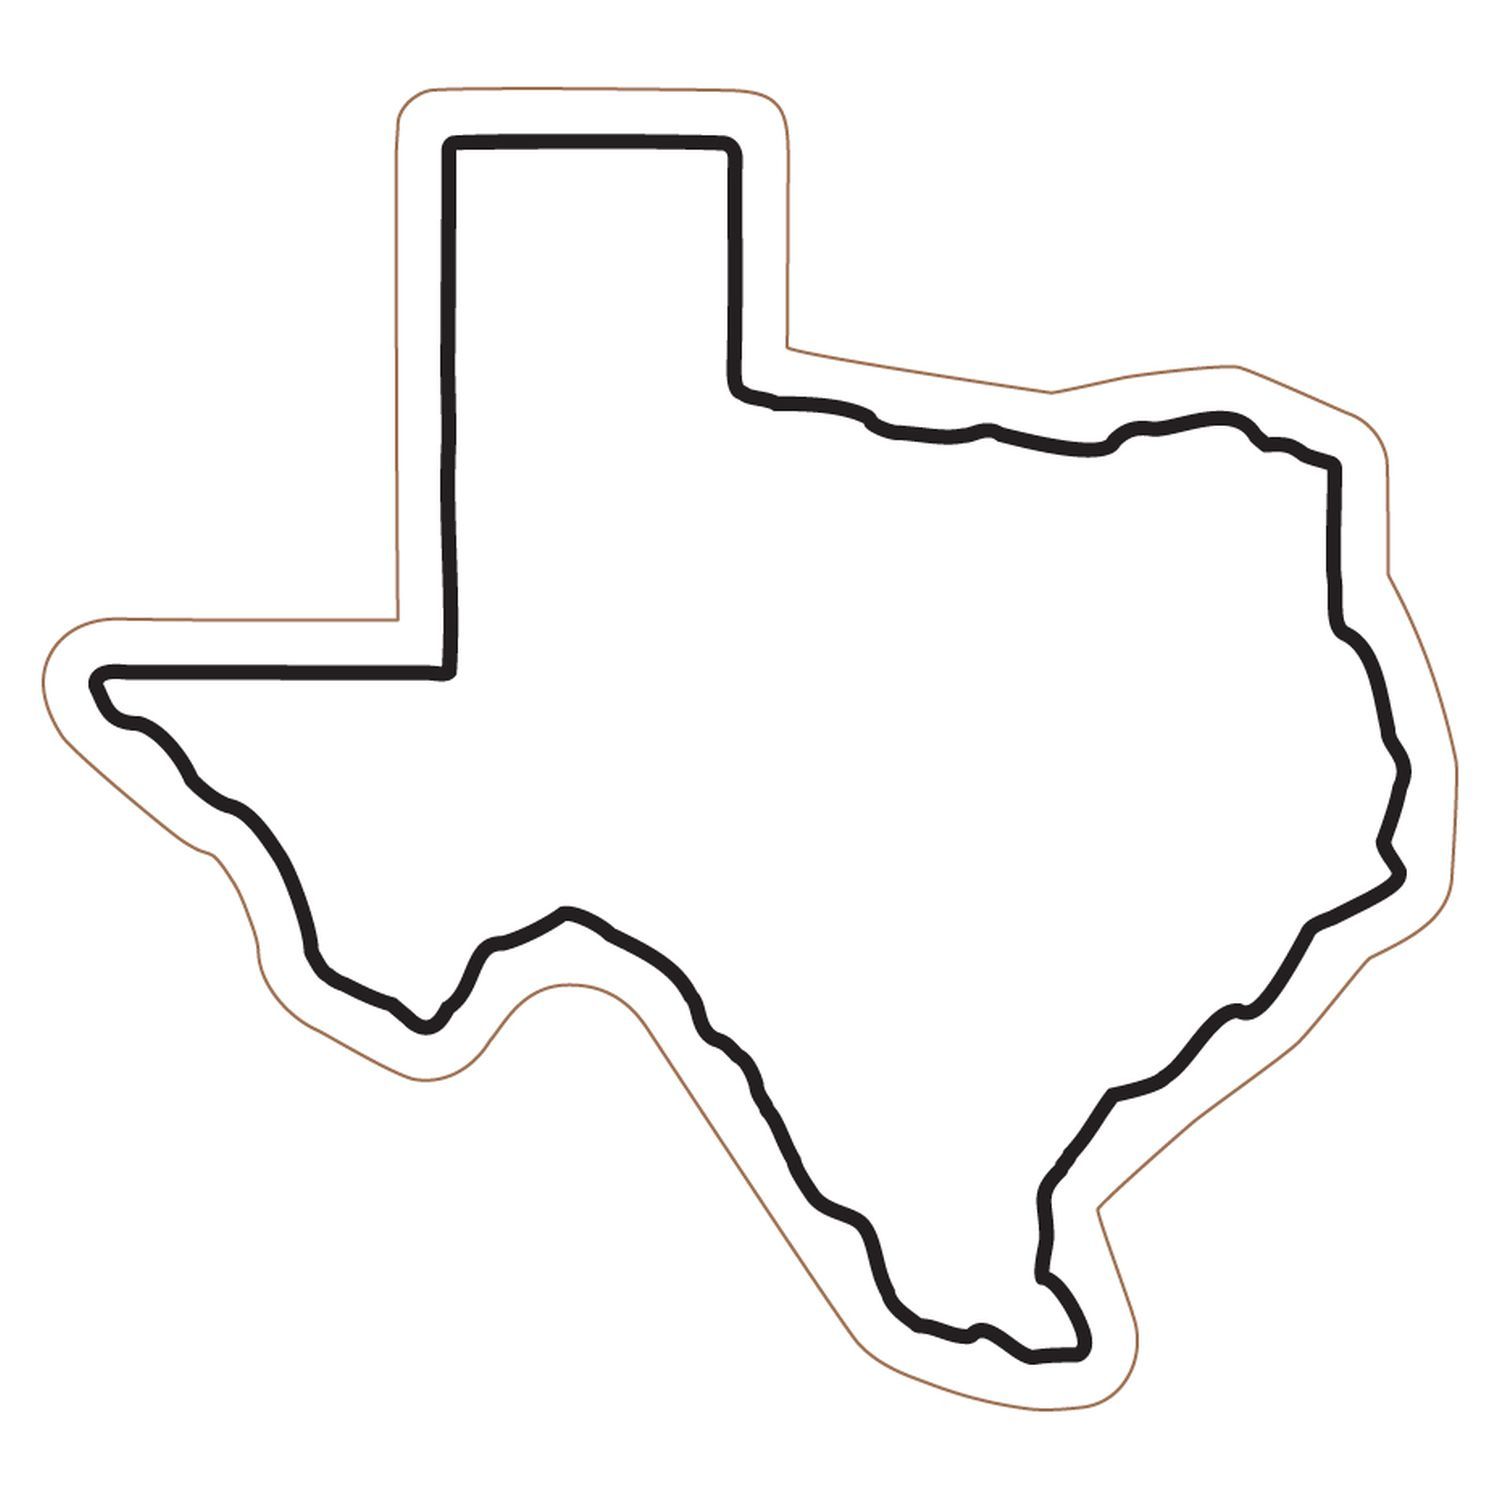 photos-of-texas-map-clip-art-texas-state-shape-outline-clipartix